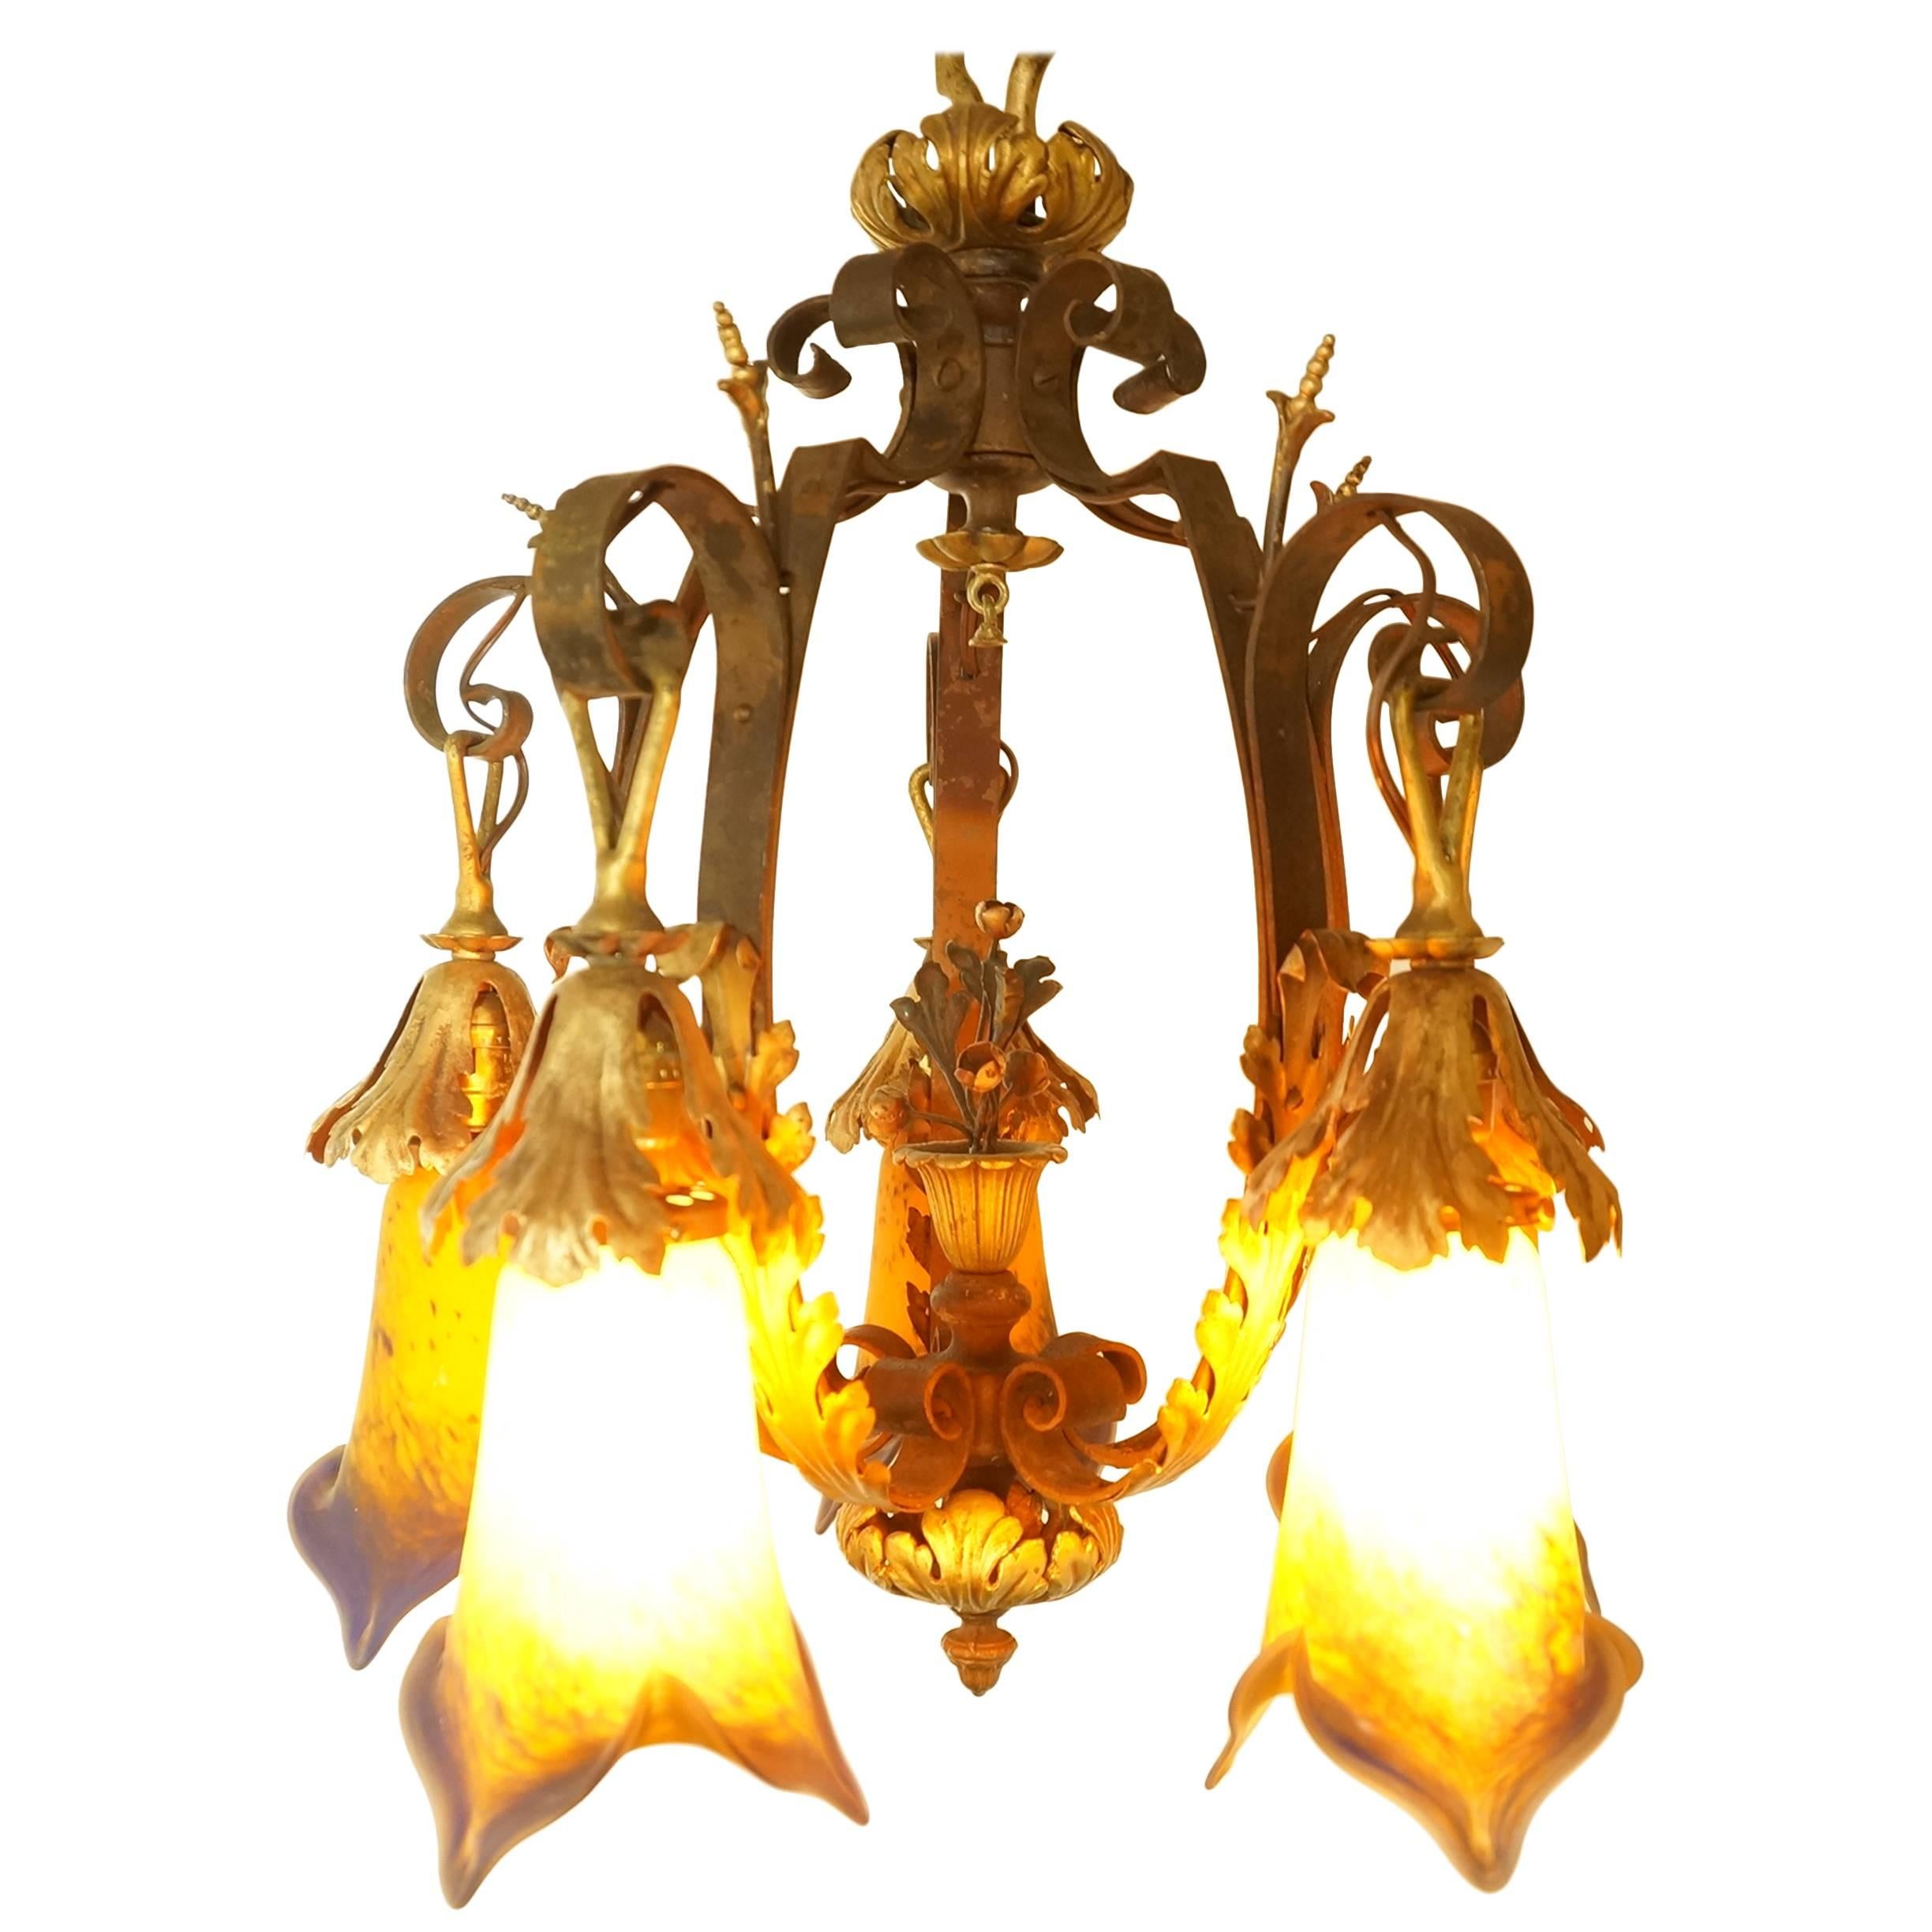 Art Nouveau Five-Arm Bronze Chandelier with Colored Glass Shades